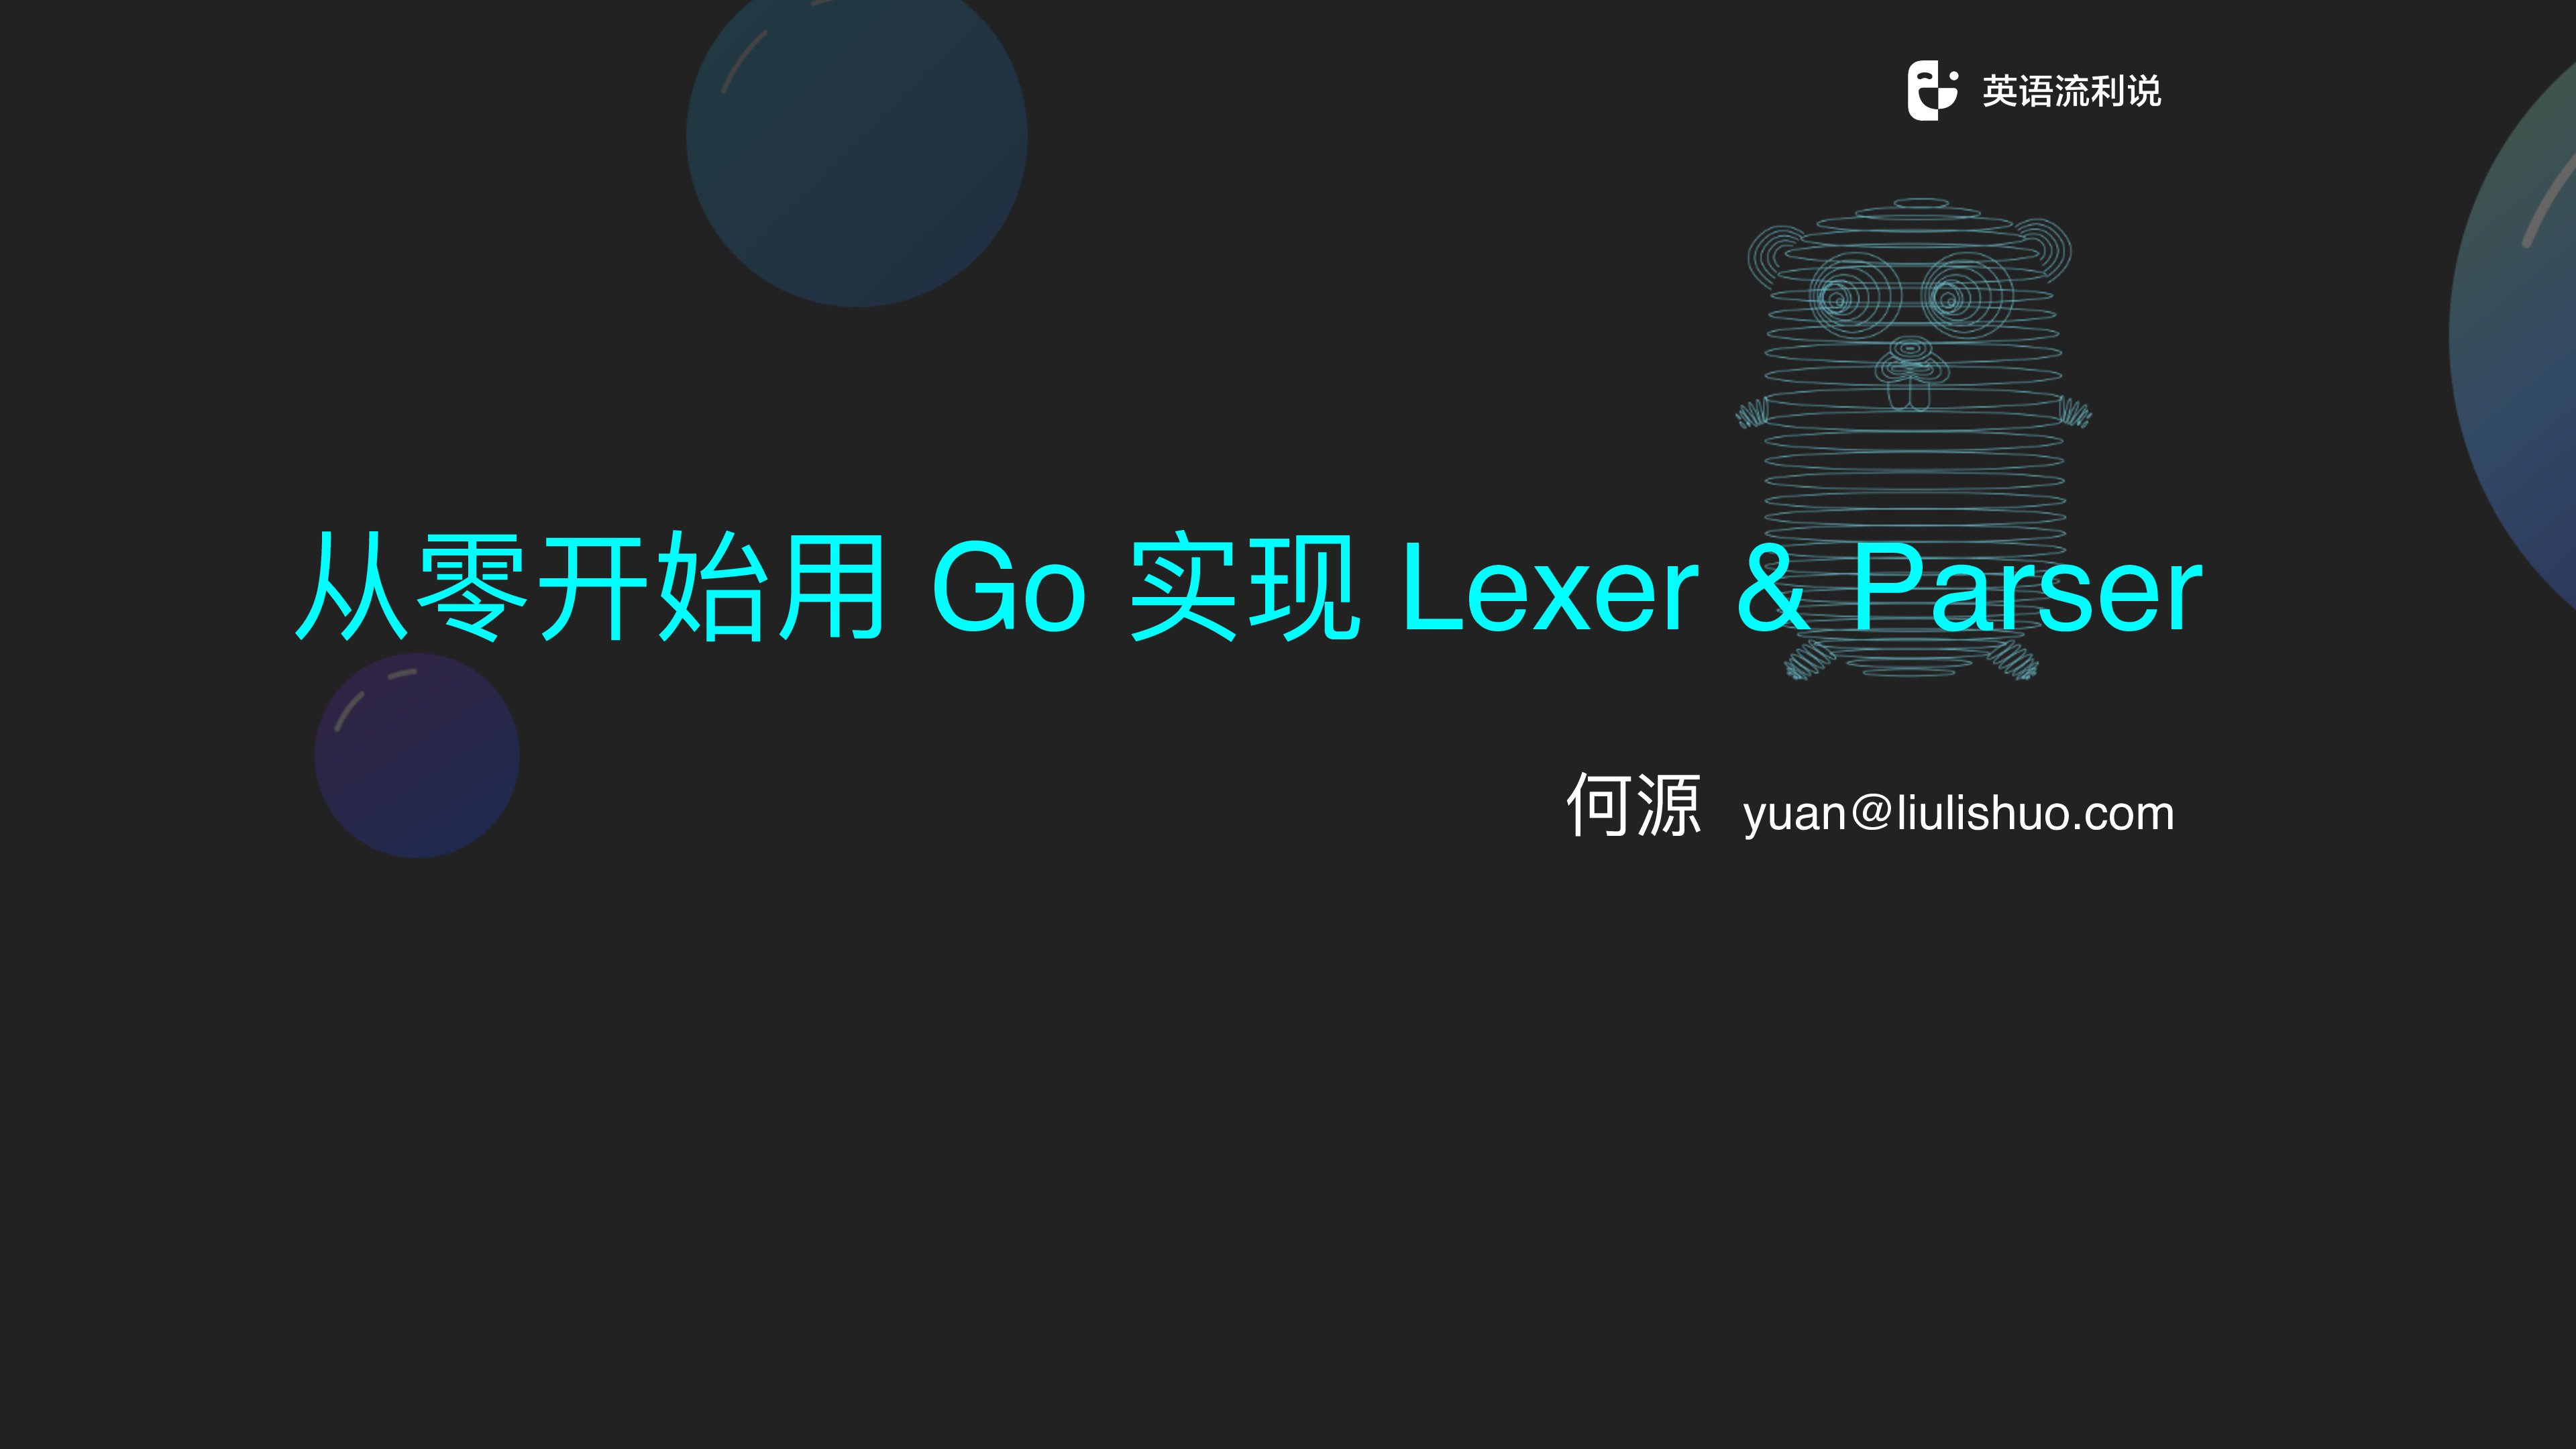 2.2 从零开始用 Go 实现 Lexer & Parser – 何源